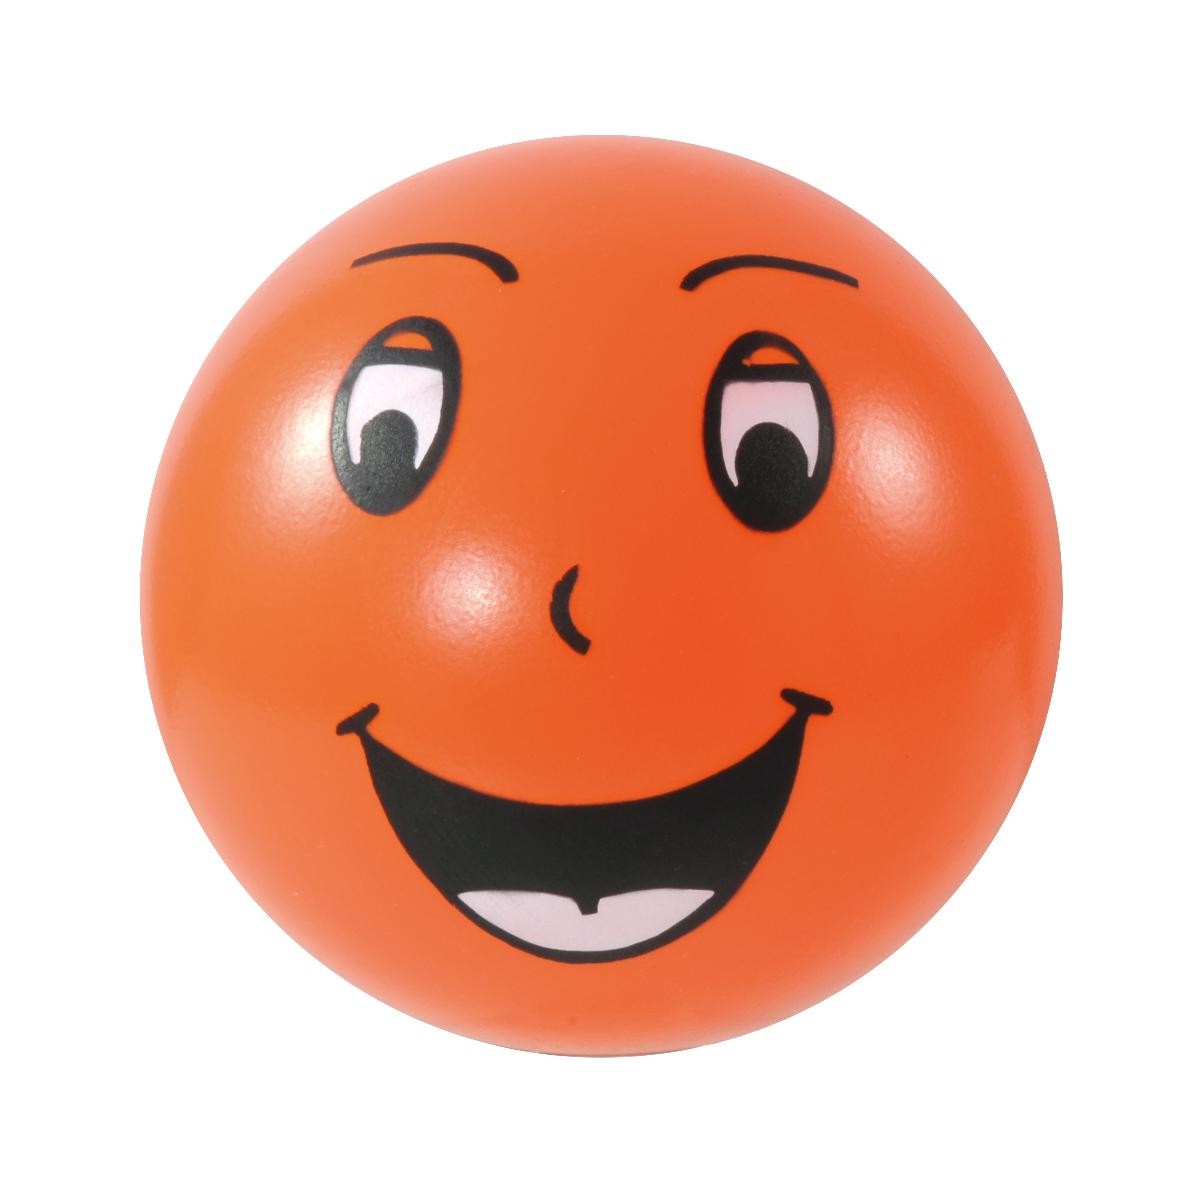 Emotional balls 6 set - Dimensions: Ø ca.15cm - Material: PE - 35,80